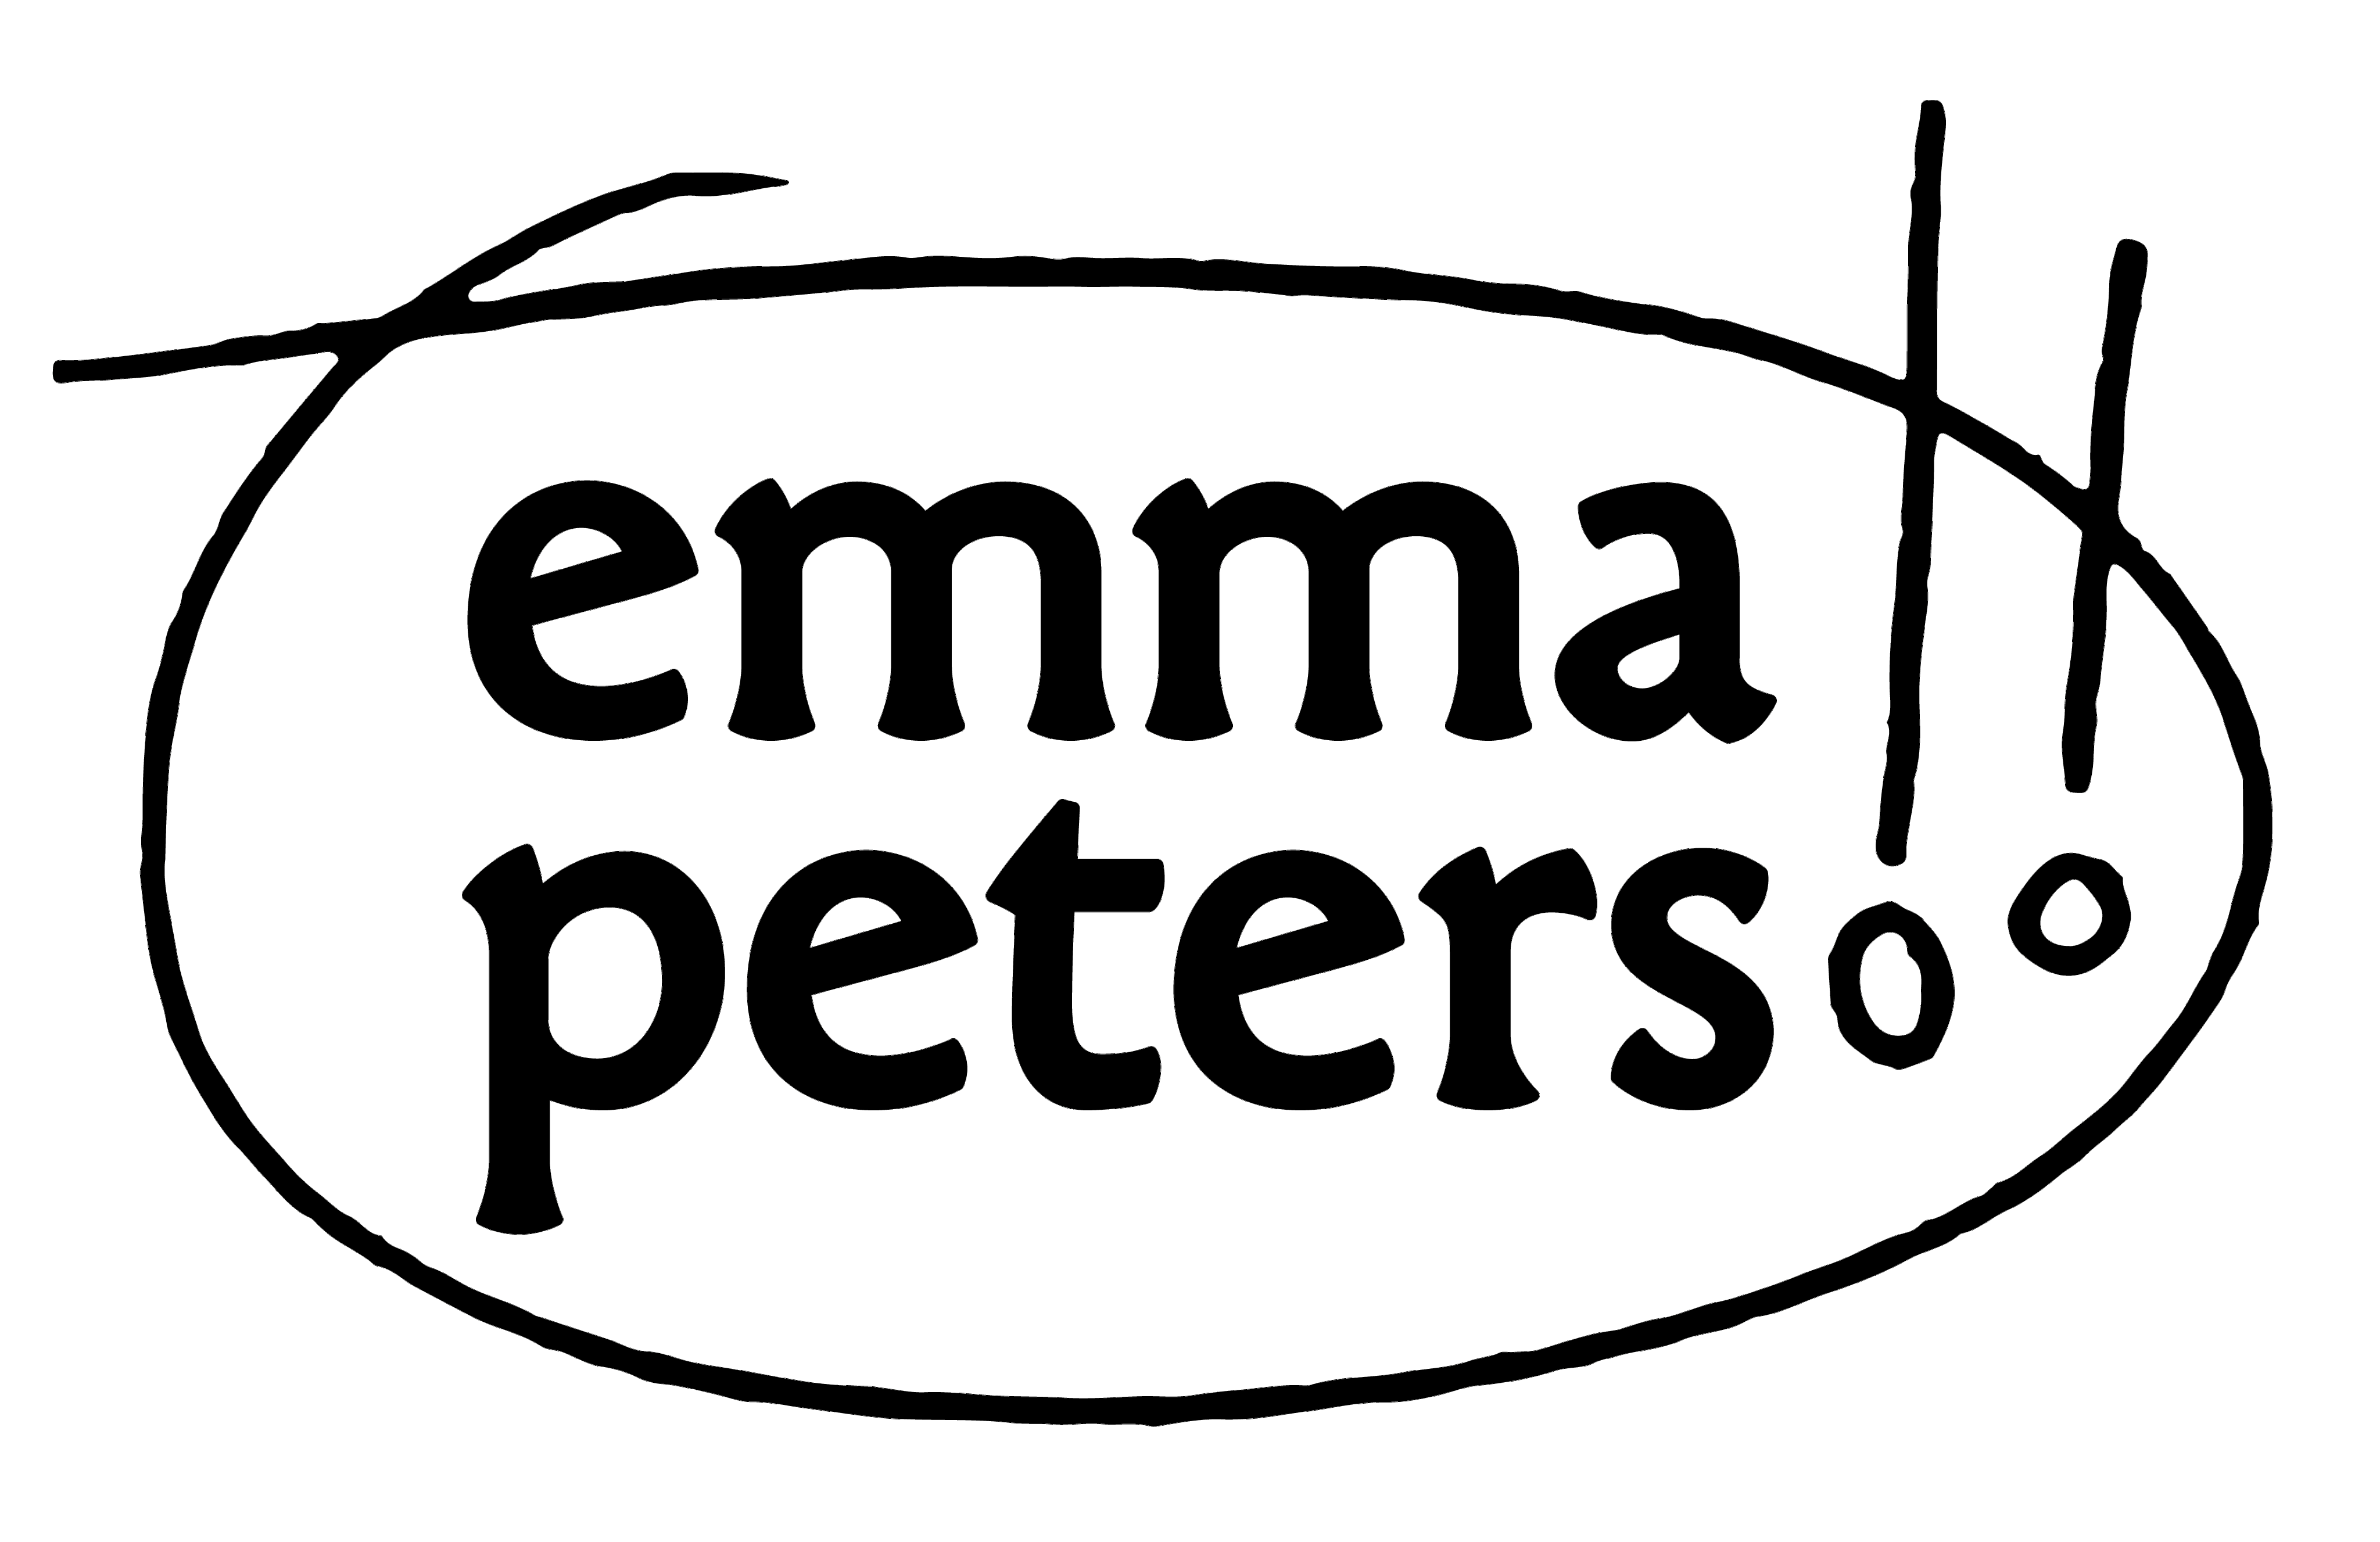 emma peters